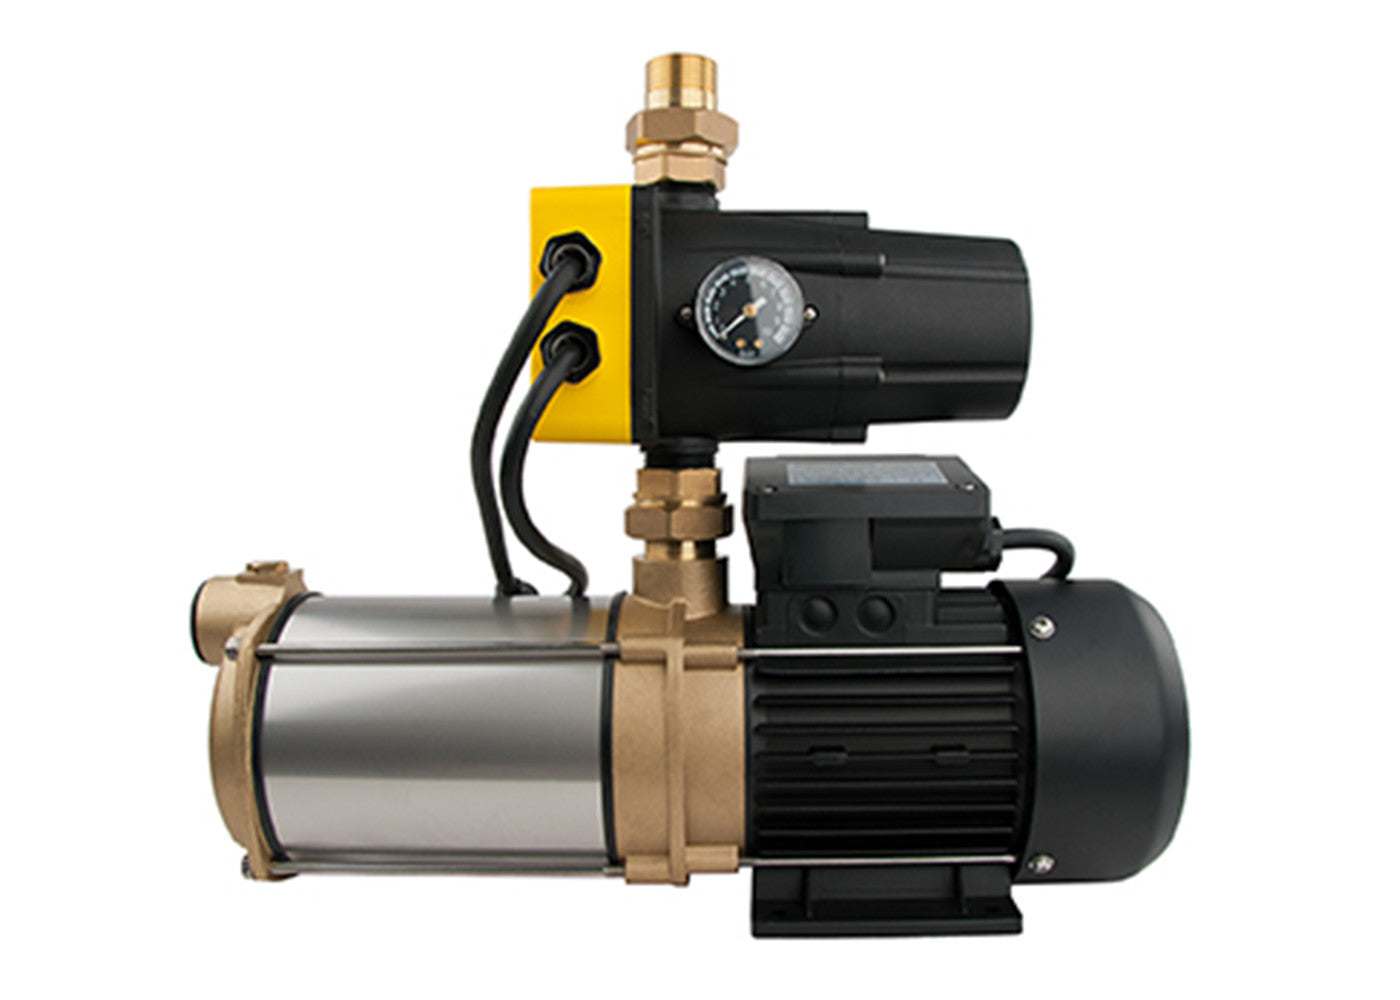 Hauswasserautomat CPS 20-5MB/Kit 05 OPTIMATIC für das Haus